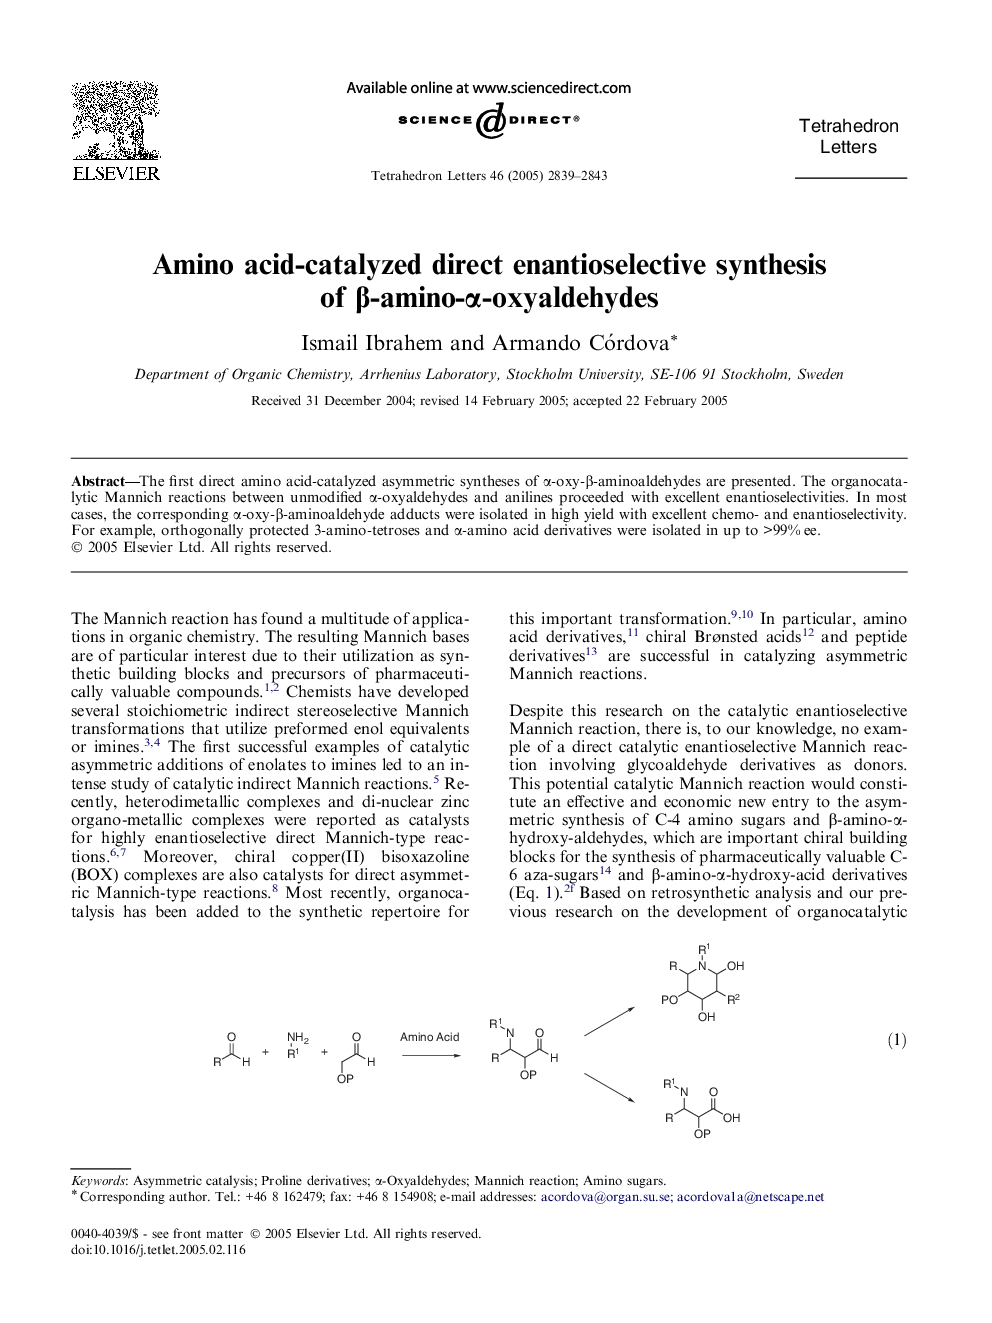 Amino acid-catalyzed direct enantioselective synthesis of Î²-amino-Î±-oxyaldehydes